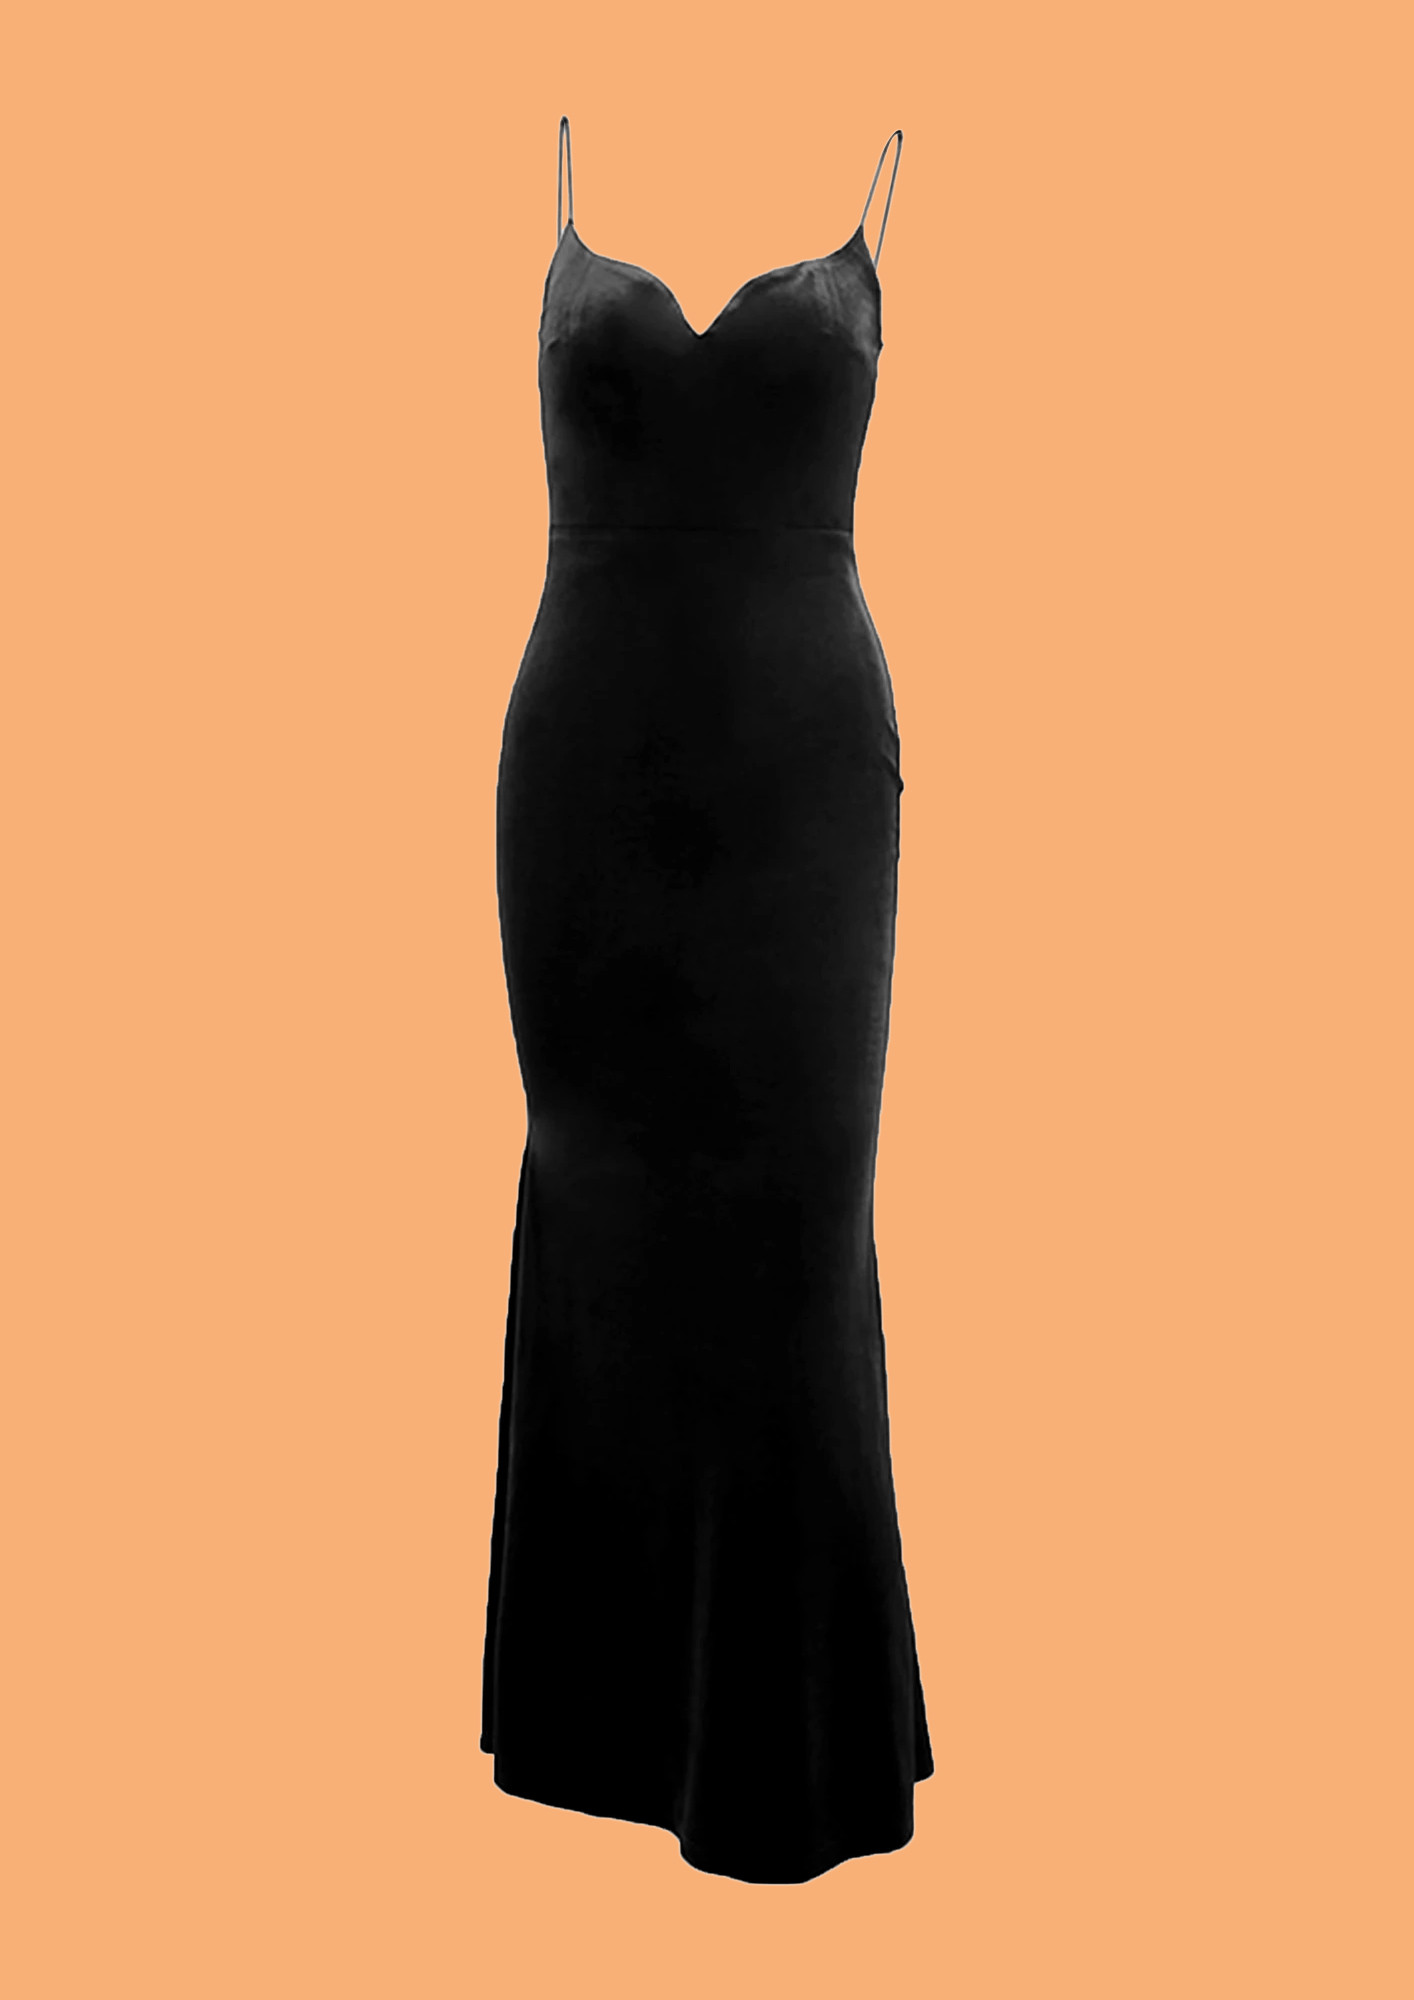 Estee Long Sleeve Mesh Party Dress Black | Mesh party dress, Black dresses  casual, Black dress